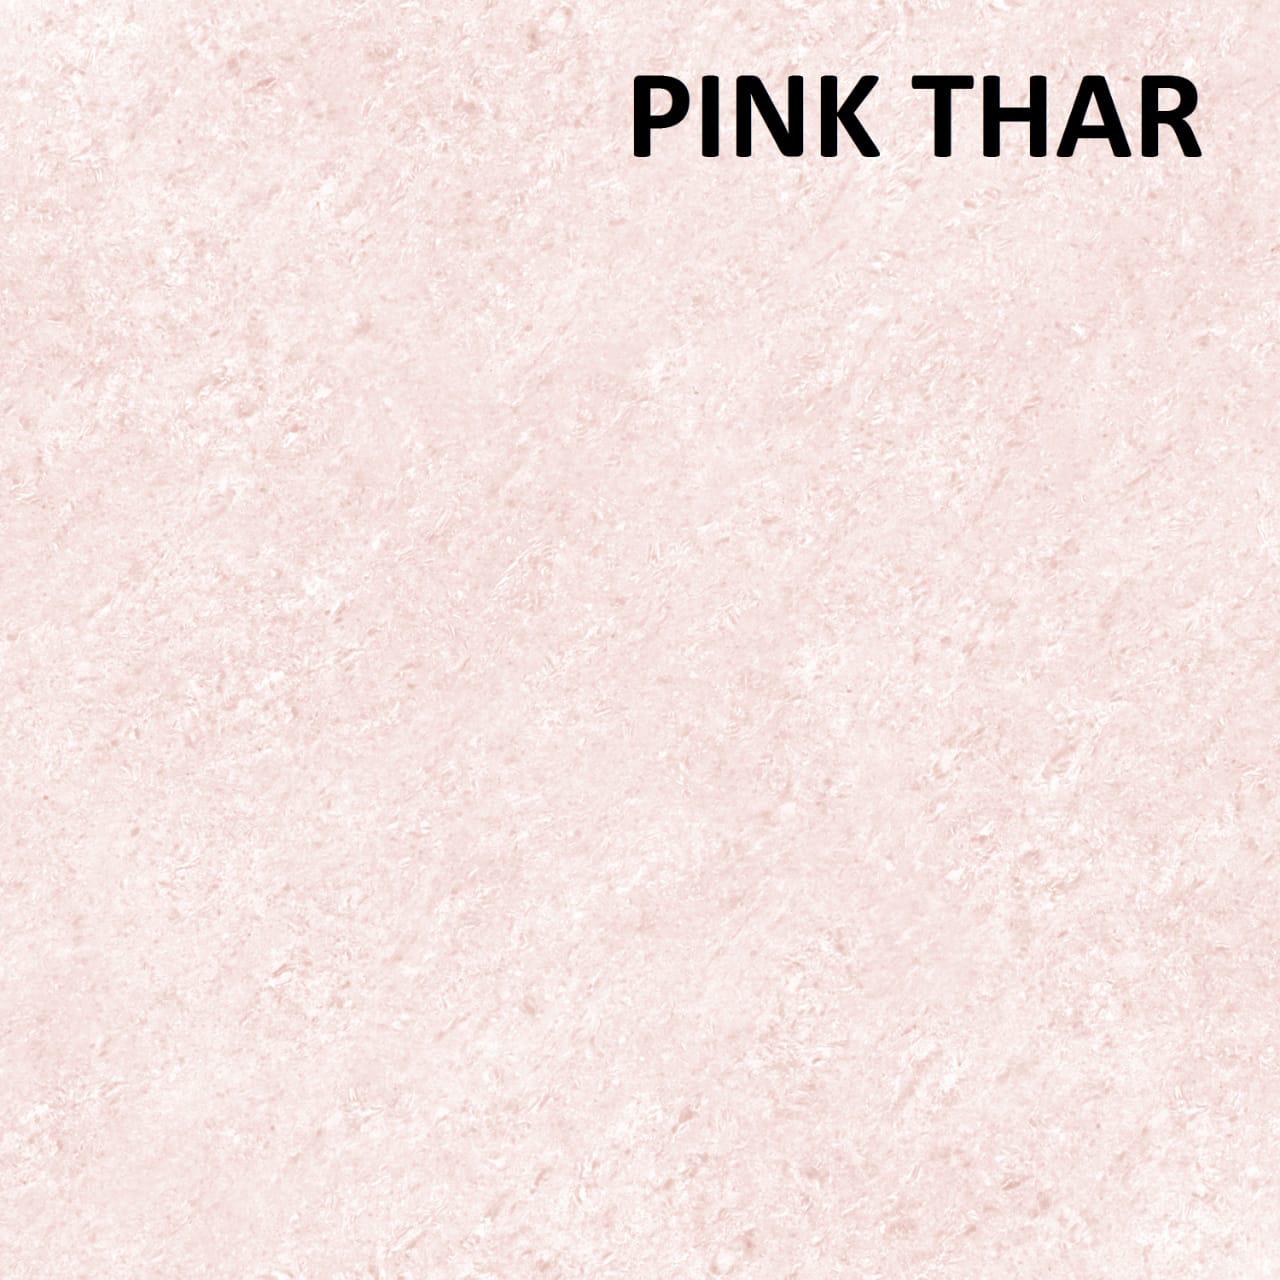 Pink Thar